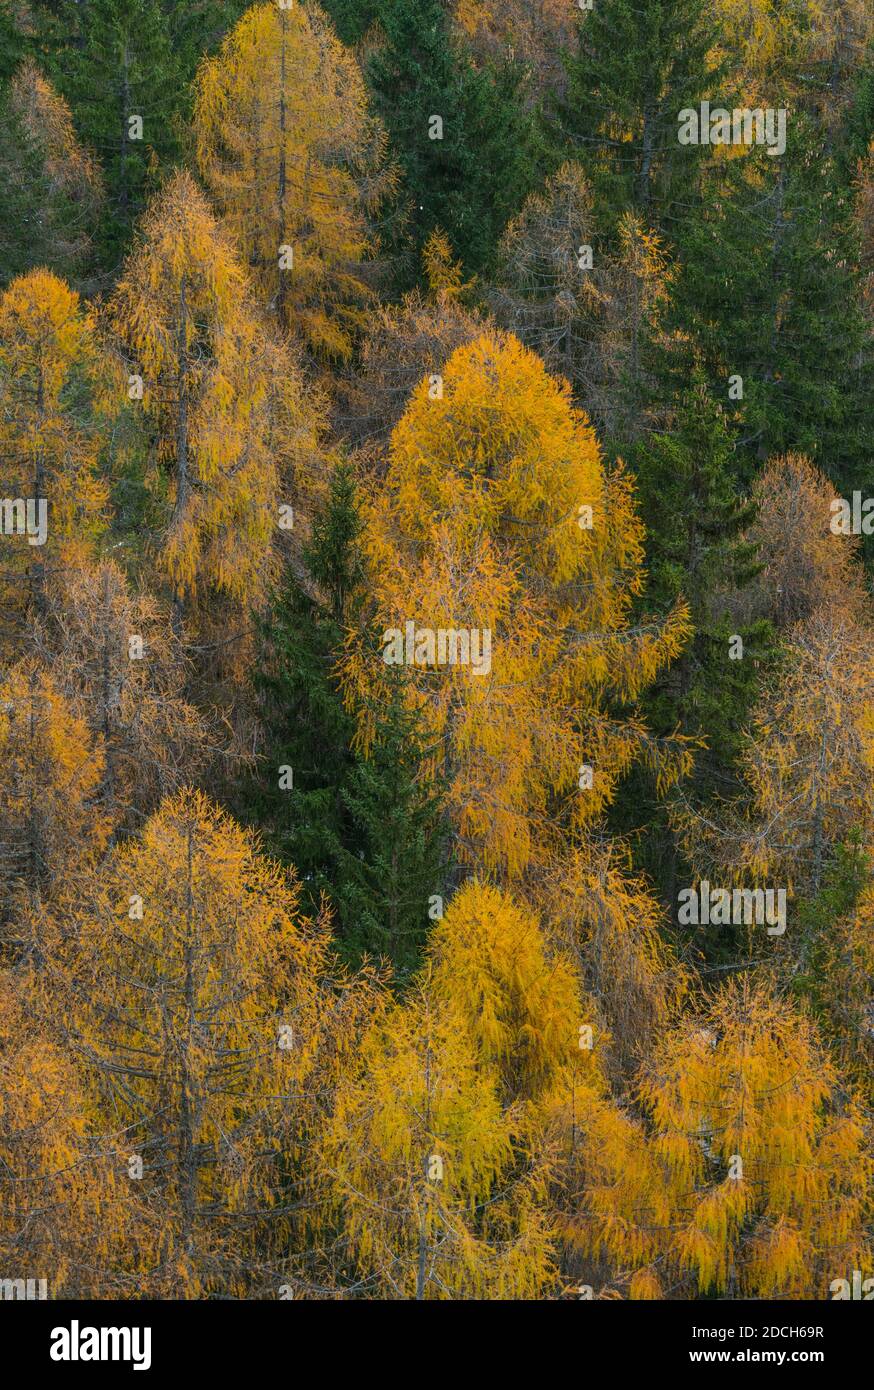 European Larch forest, Cortina D'Ampezzo, Belluno province, Dolomites, Unesco World Heritage Site, Italy, Europe Stock Photo